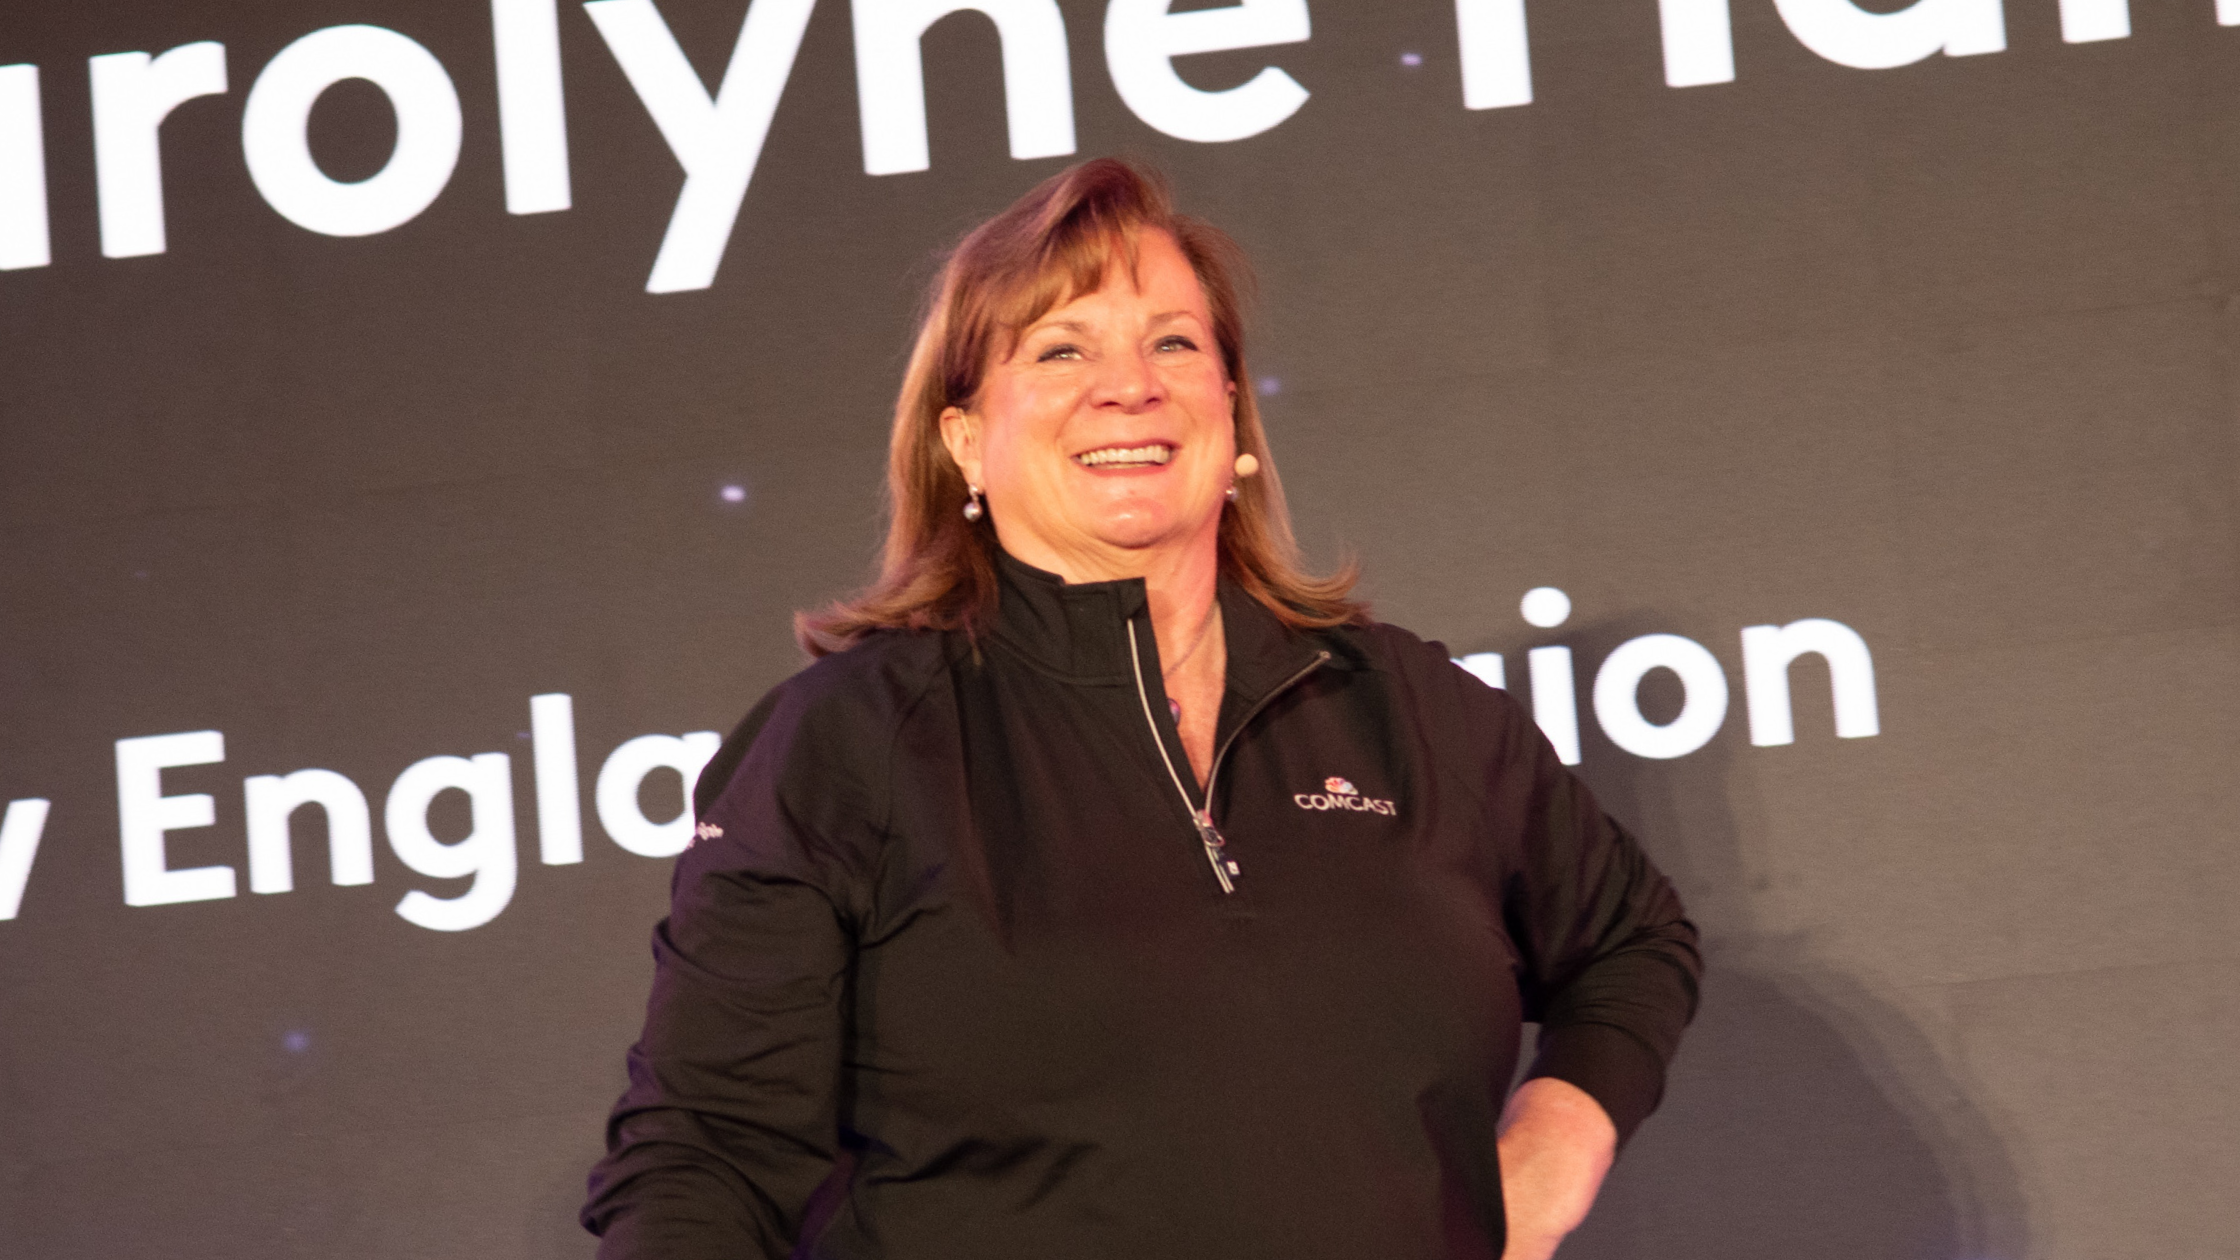 Our Voices: Meet Carolyne, Regional Senior Vice President for Comcast’s New England Region 